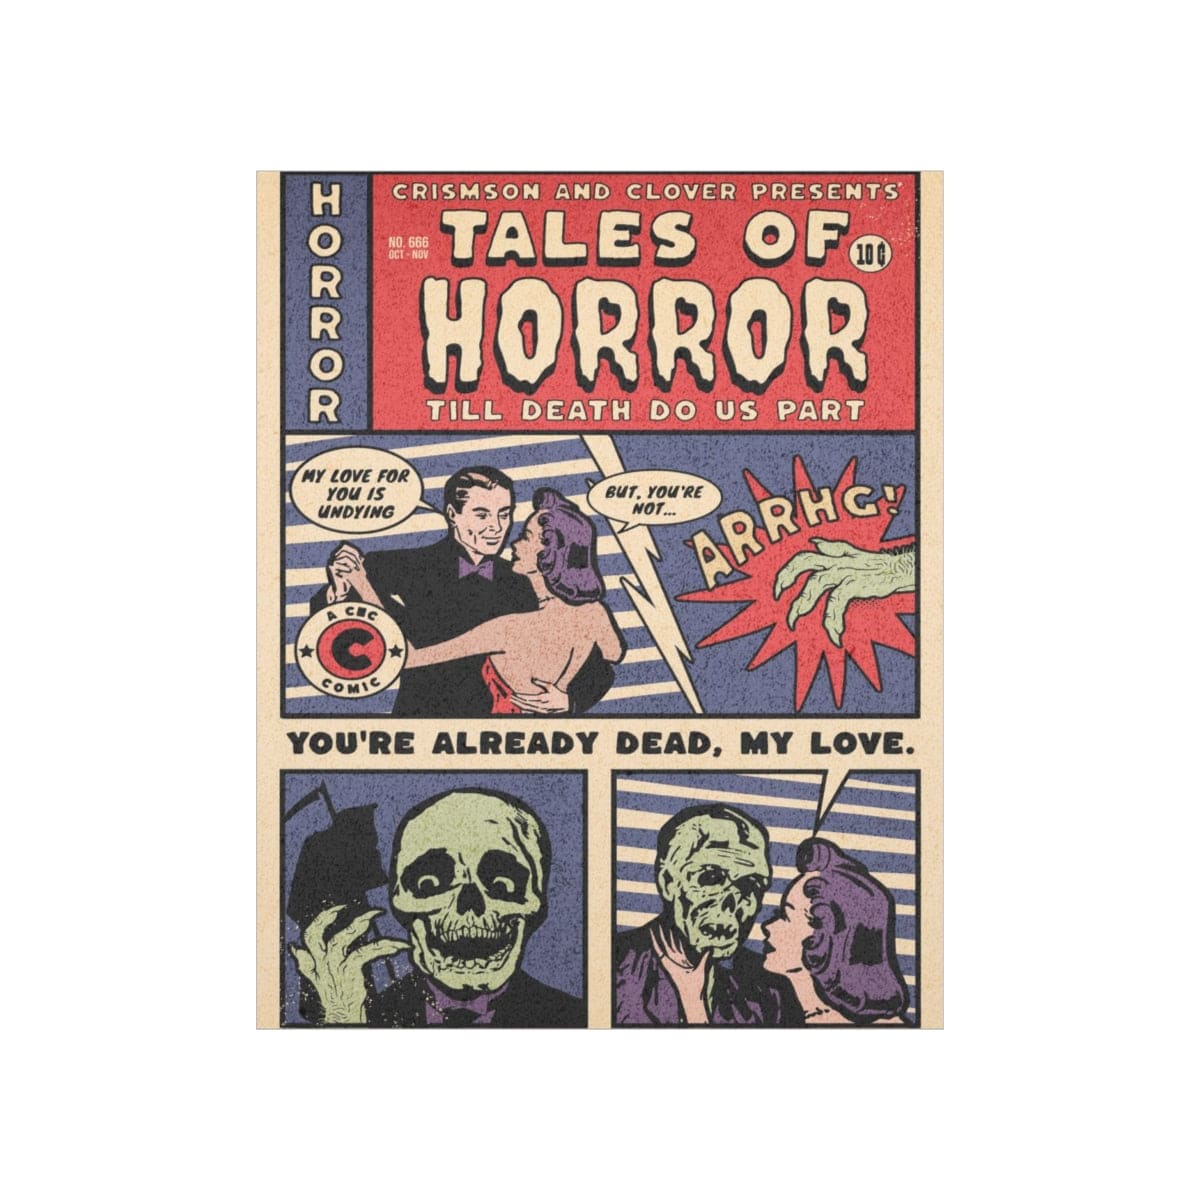 Horror Comic Poster Print